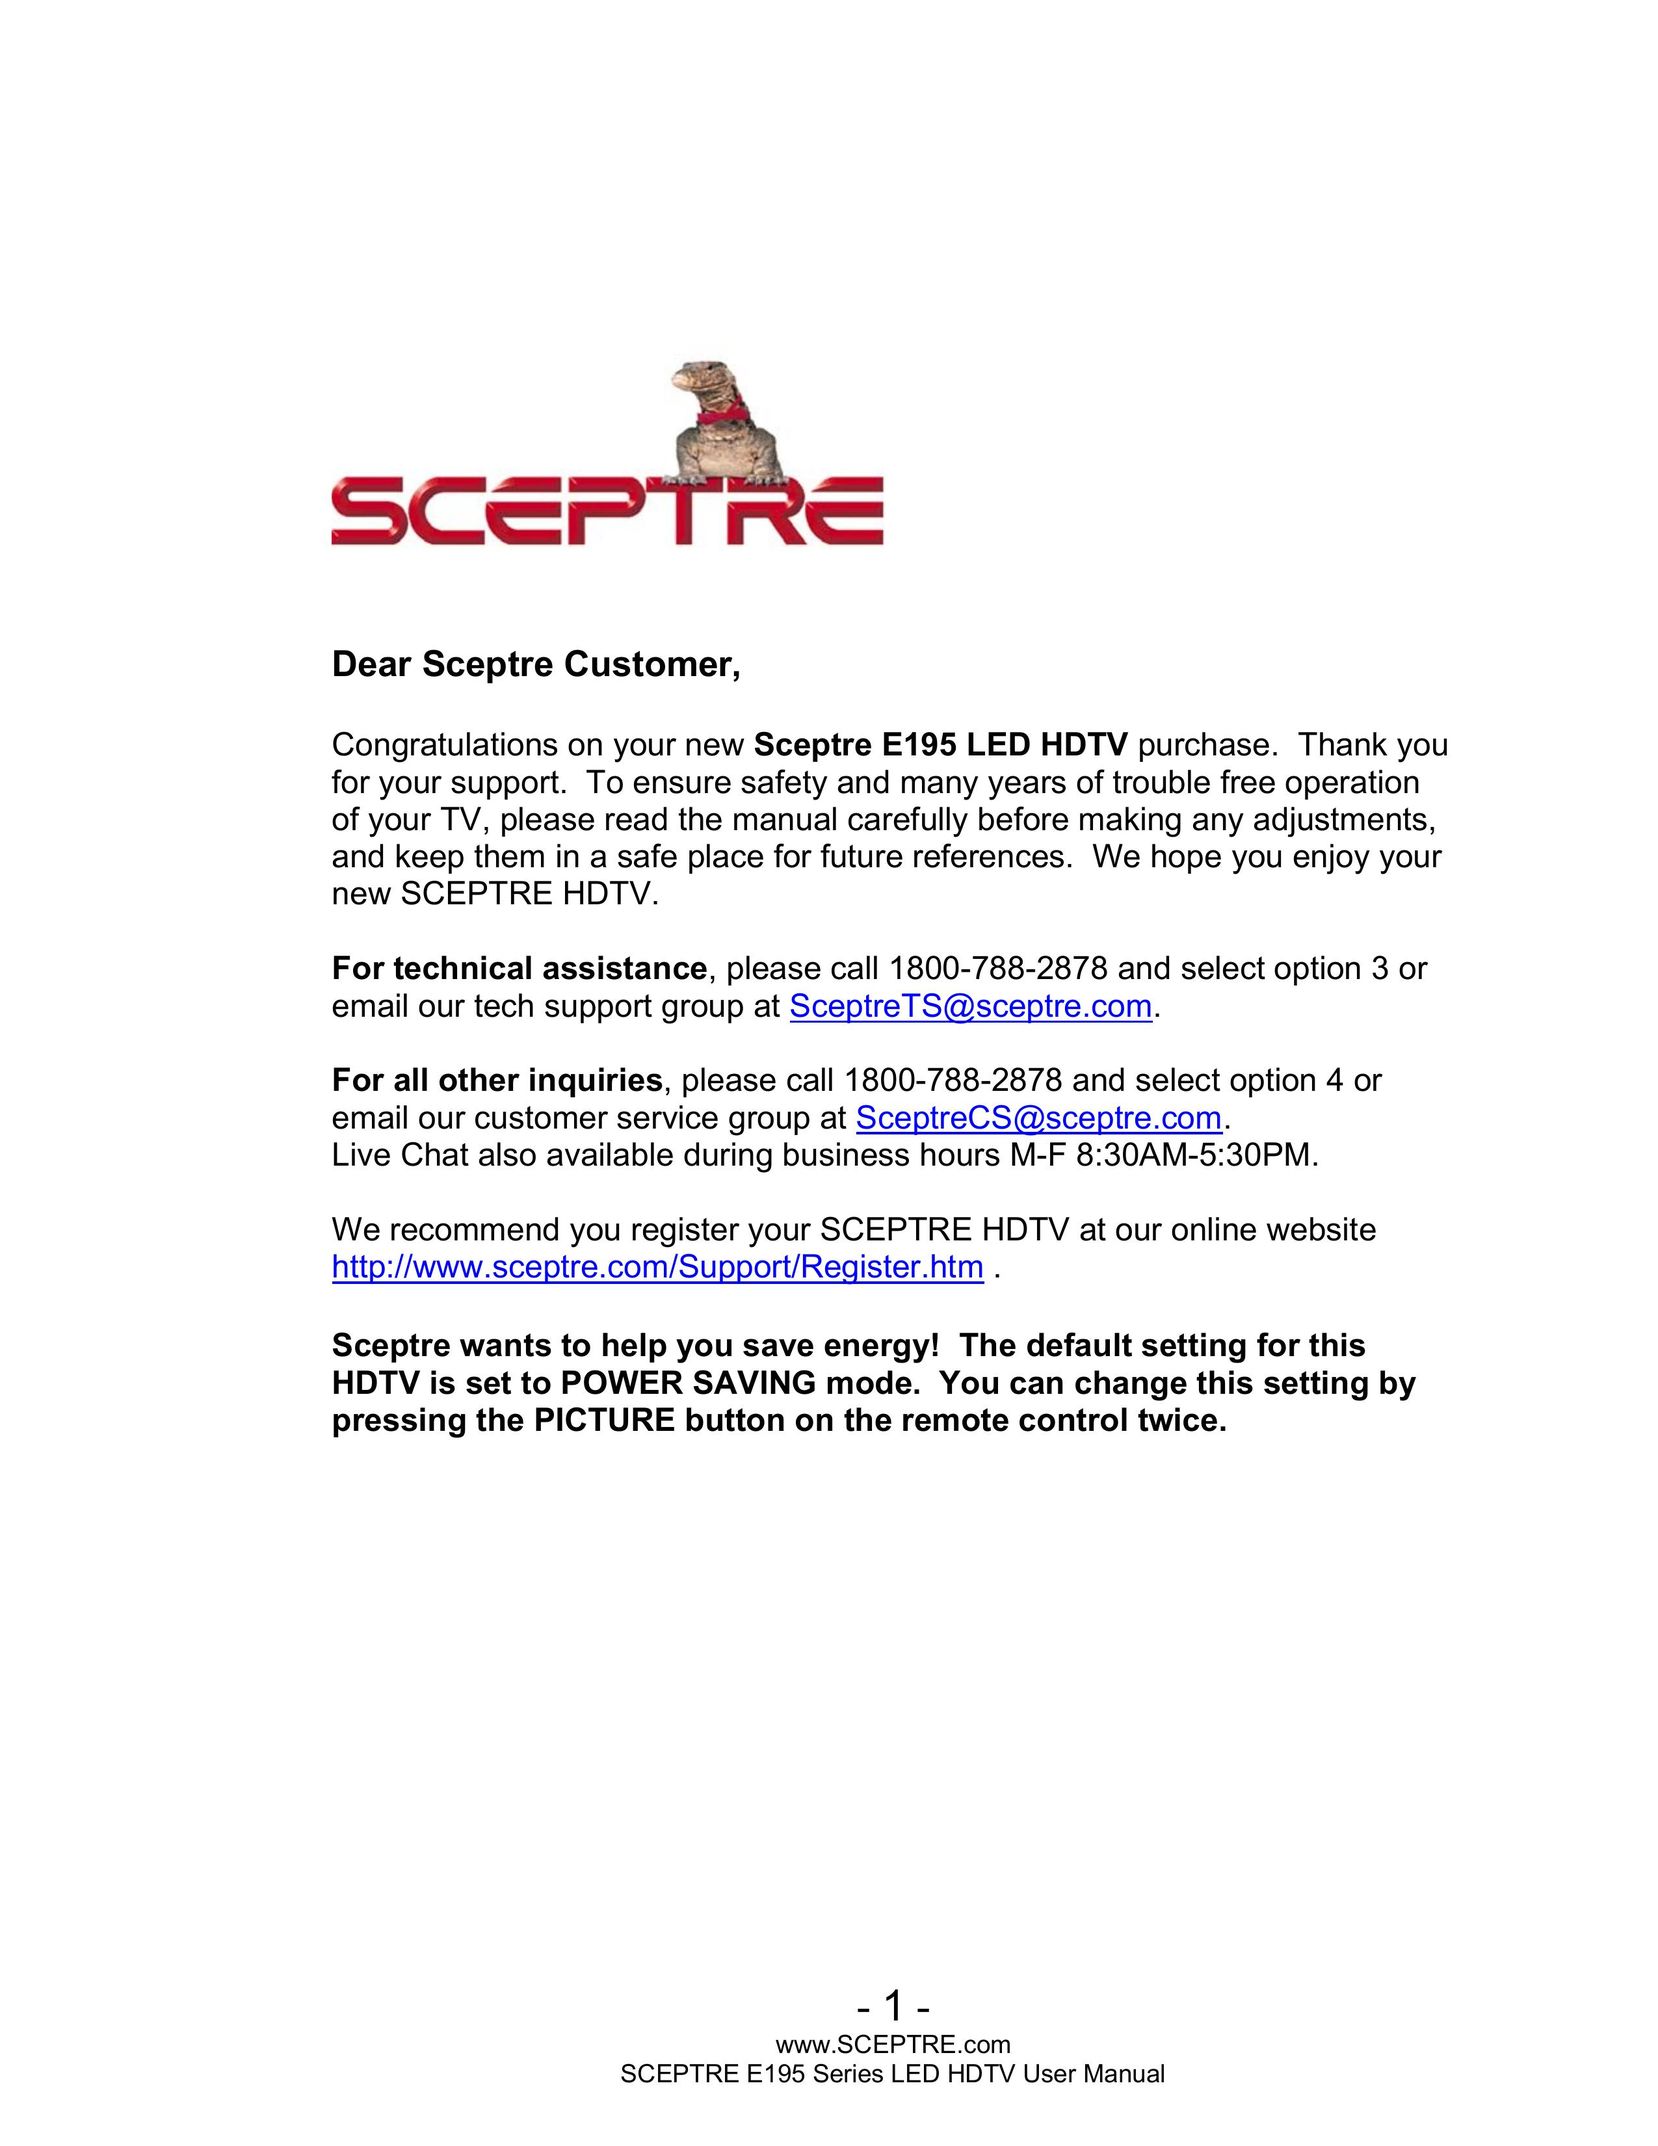 Sceptre Technologies LED HDTV Flat Panel Television User Manual